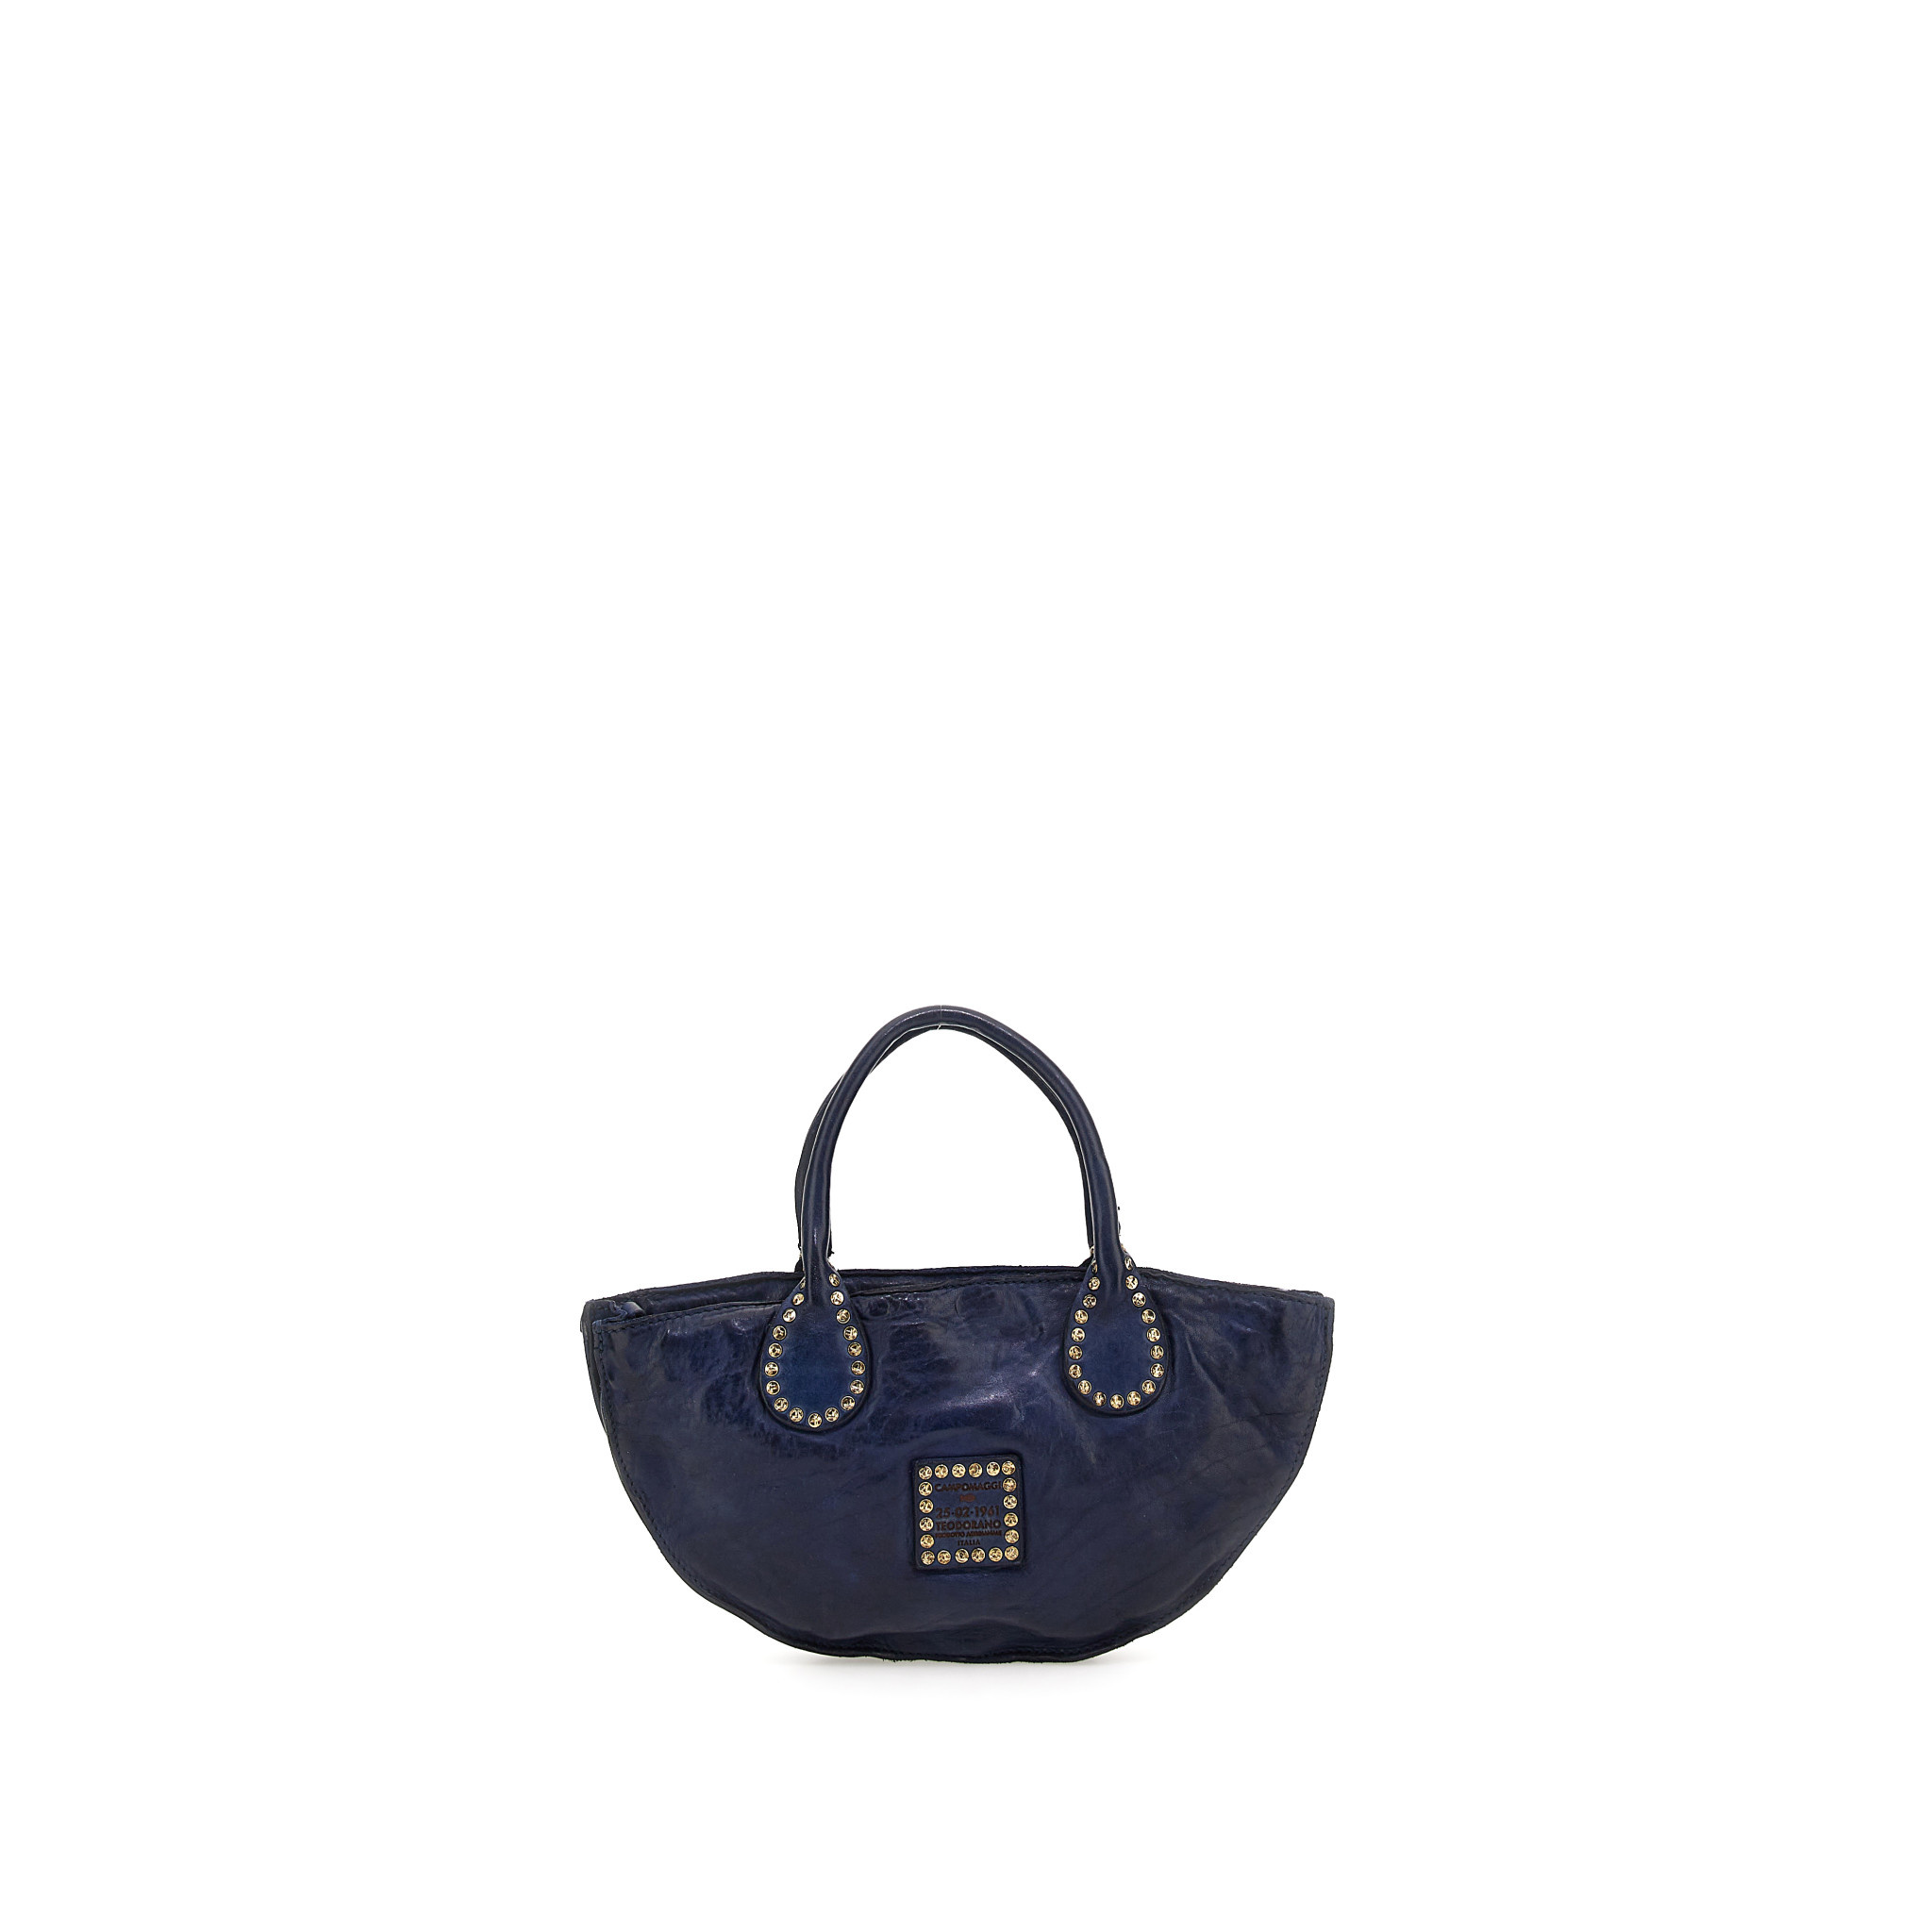 Campomaggi Shopping Bag. Small. Genuine leather. Woven+Studs. Blue Indigo.